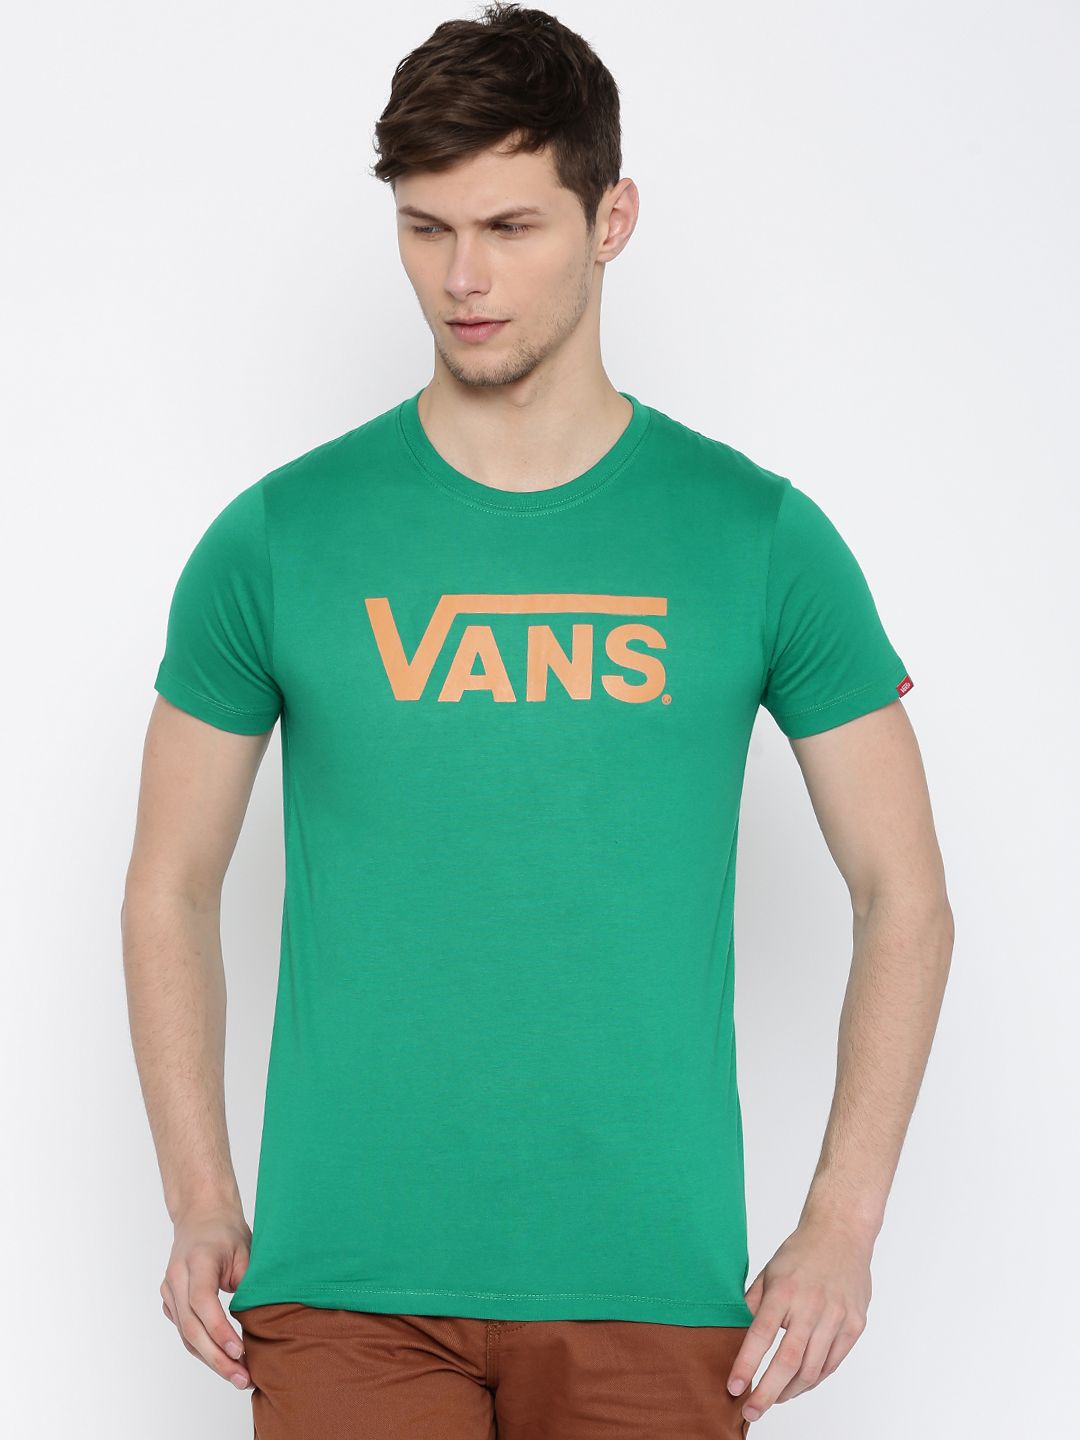 vans shirt price